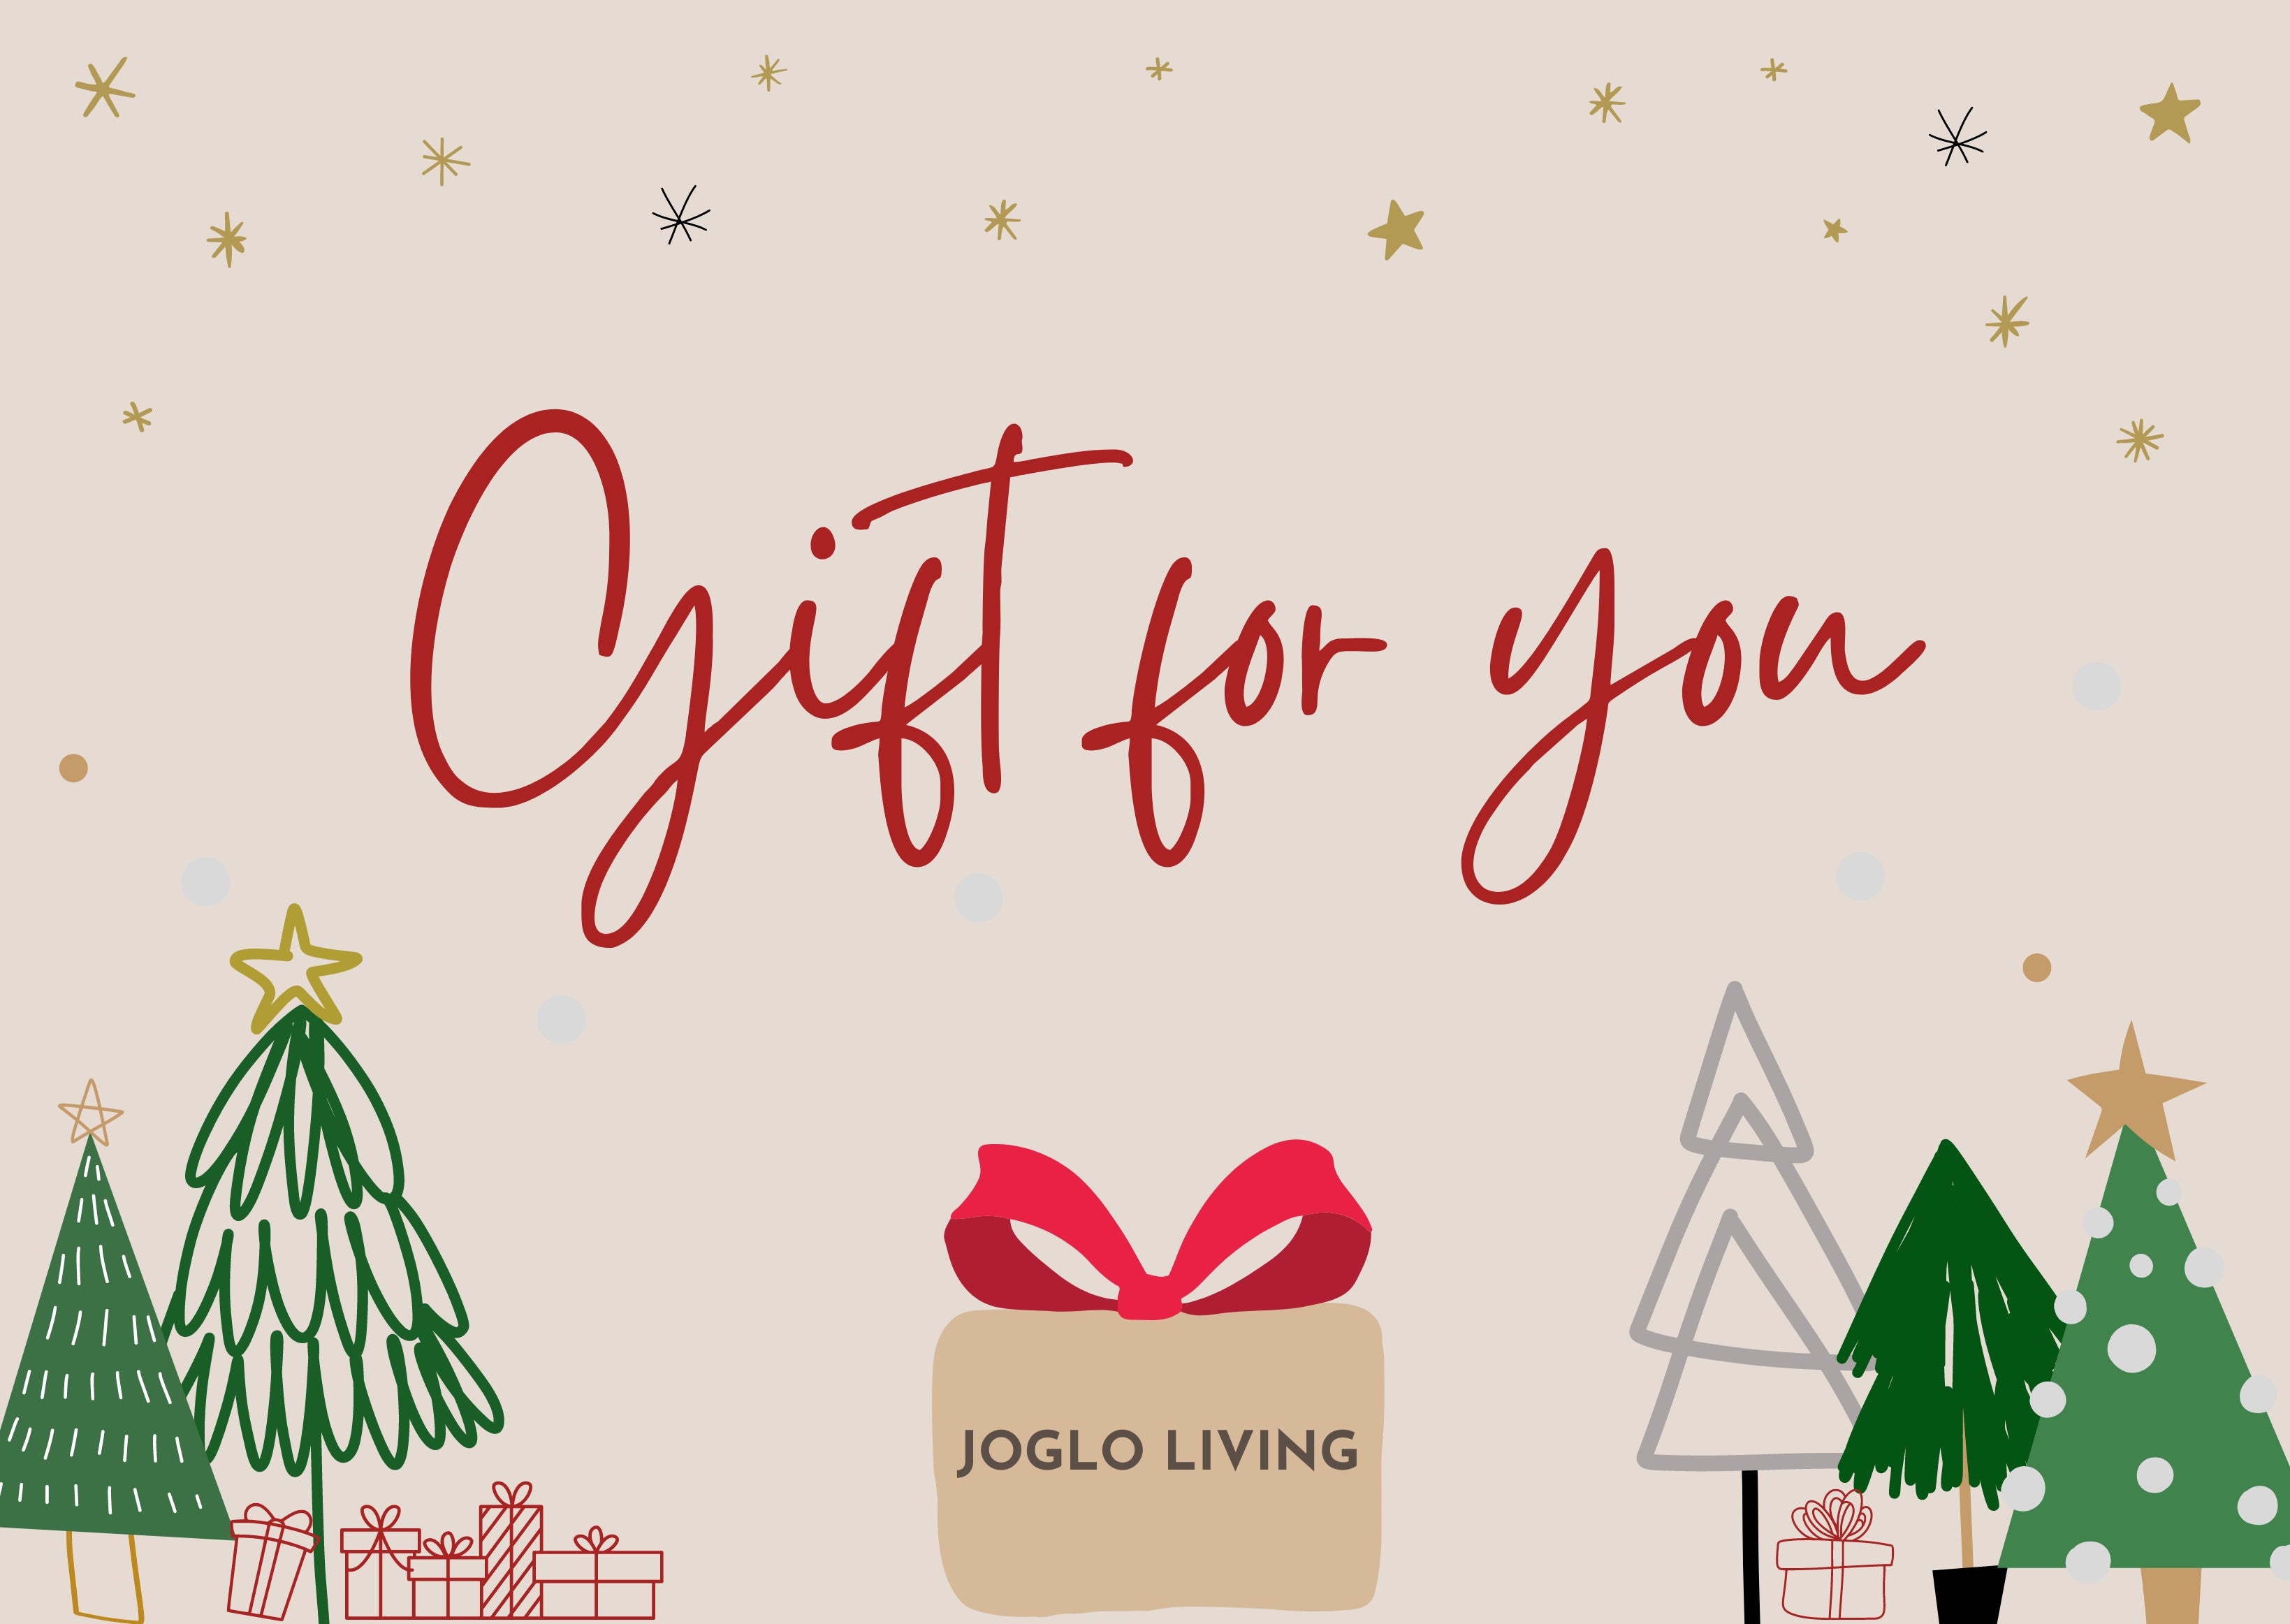 Joglo living Gift Card